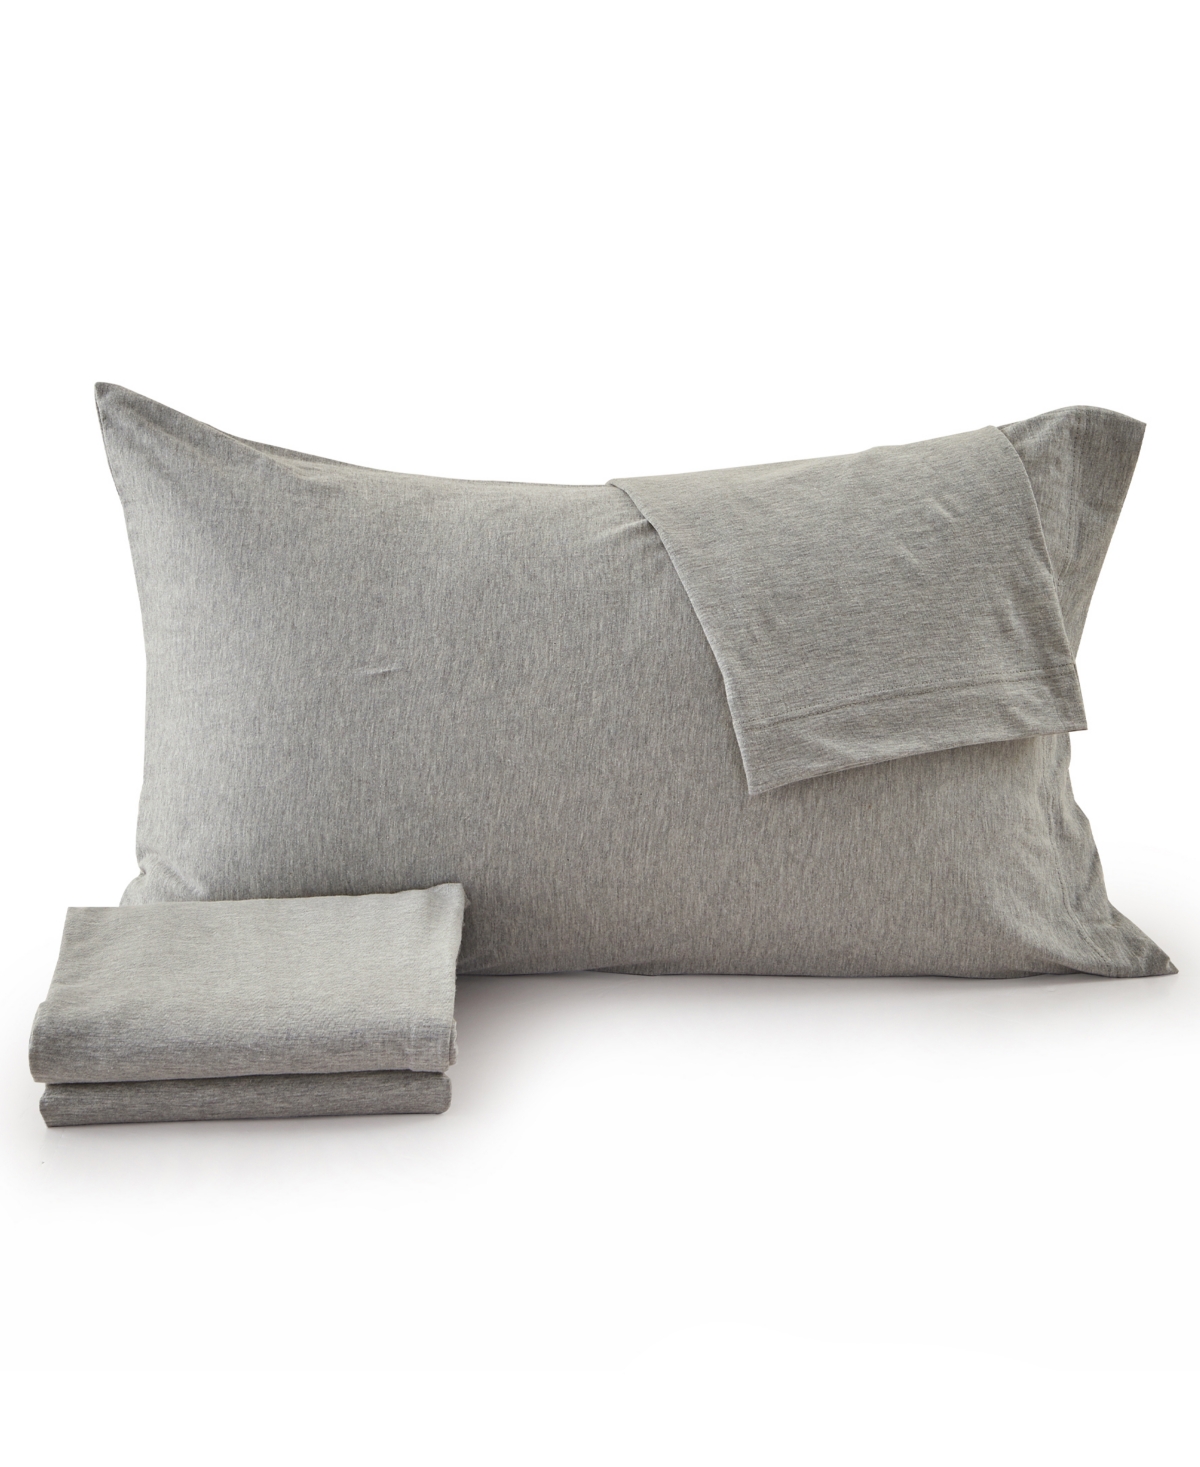 Premium Comforts Heathered Melange T-shirt Jersey Knit Cotton Blend 4 Piece Sheet Set, Full In Light Gray